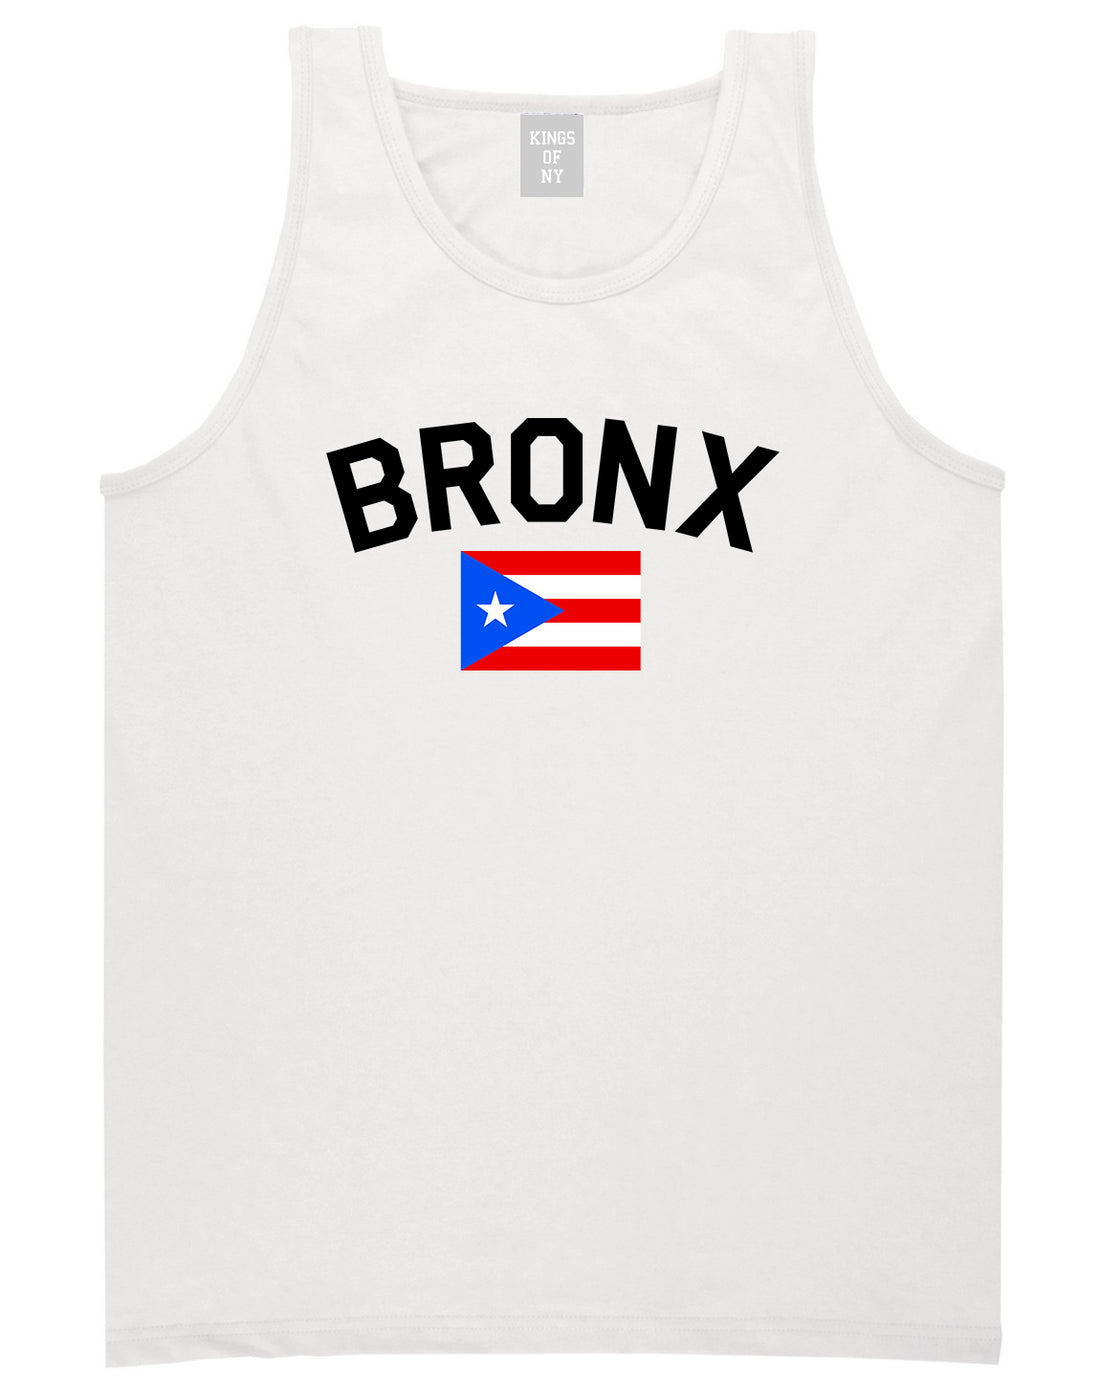 Bronx Puerto Rico Flag Mens Tank Top T-Shirt White